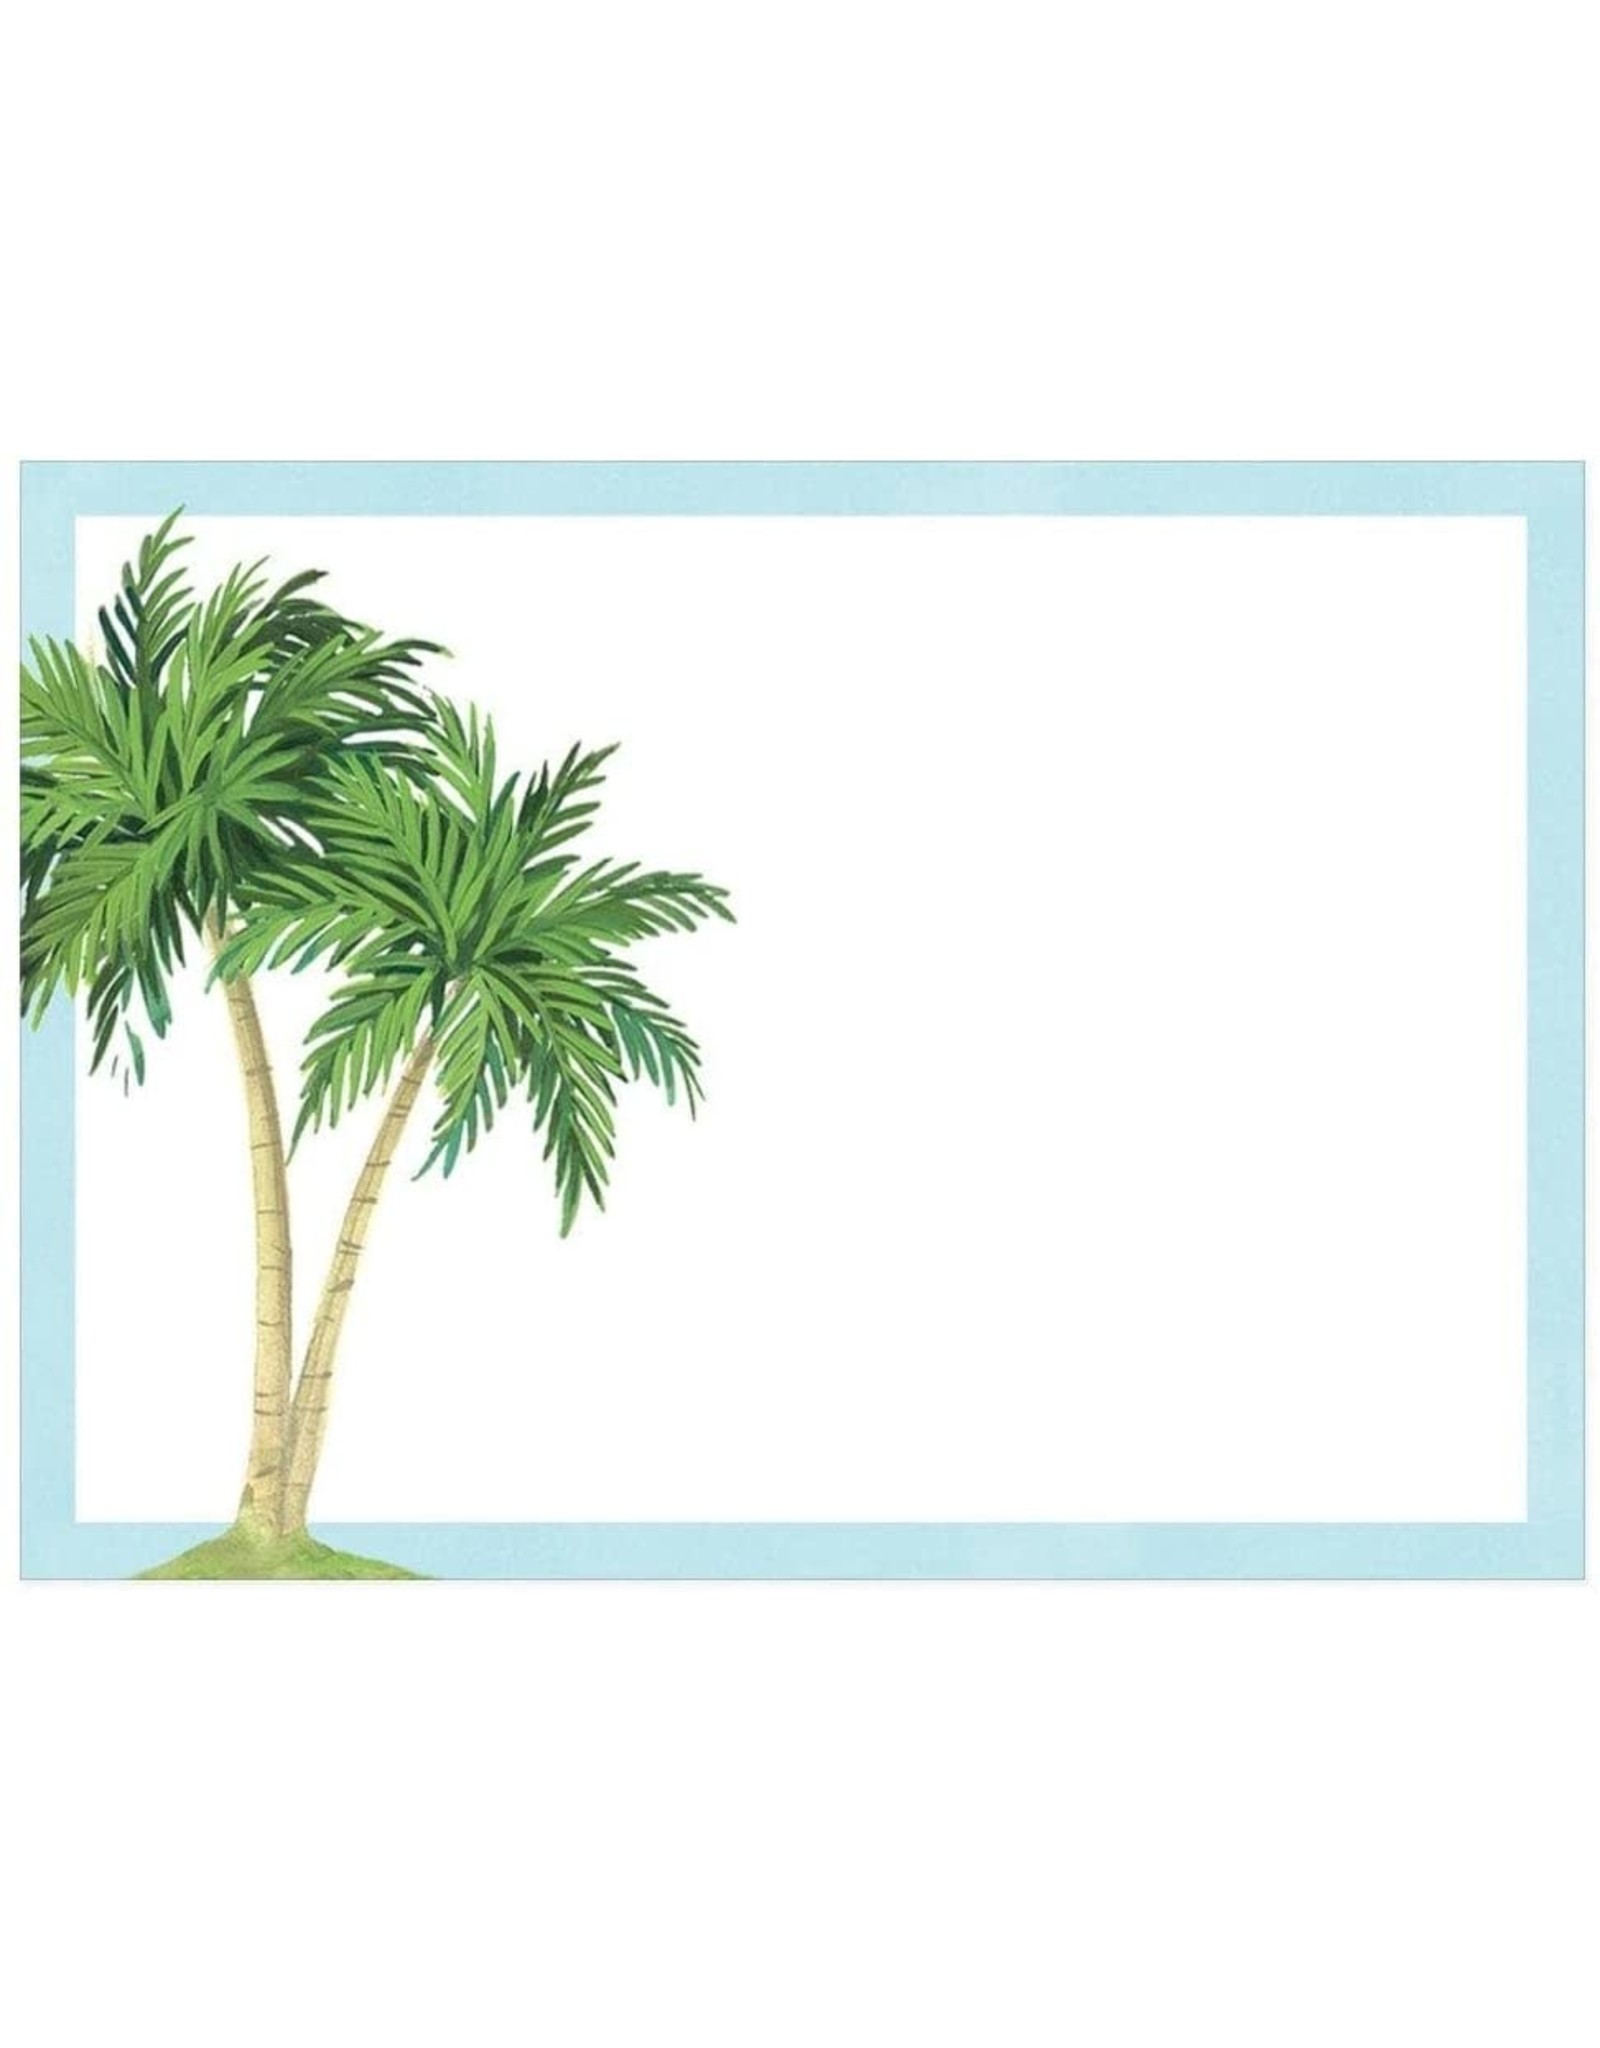 Caspari Name Tags Self Adhesive Labels 12pk Palm Trees